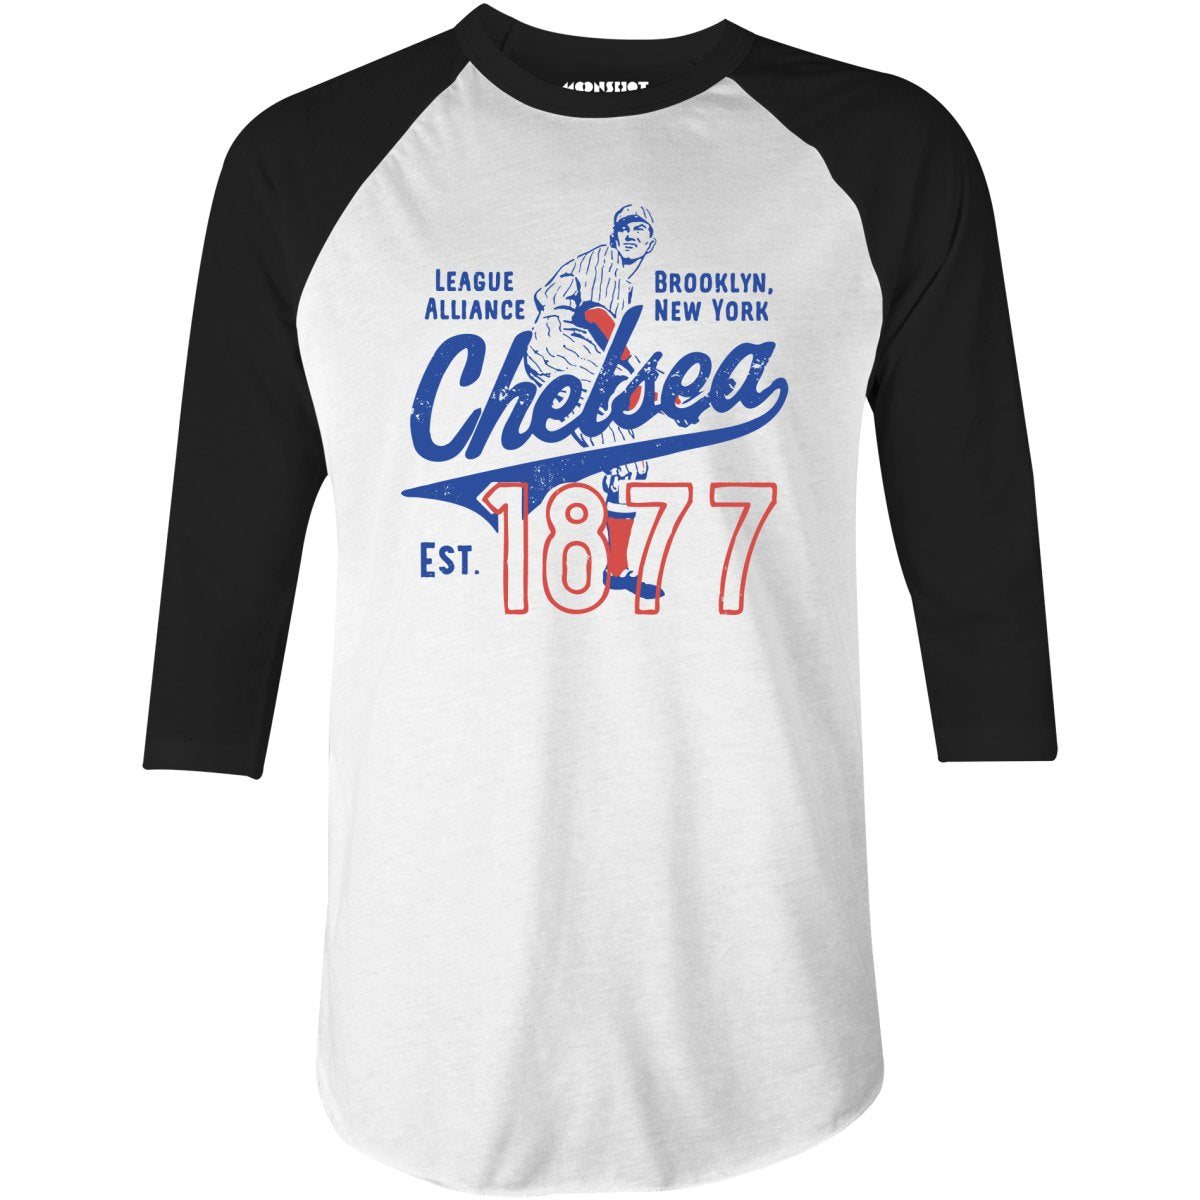 Brooklyn Chelsea - New York - Vintage Defunct Baseball Teams - 3/4 Sleeve Raglan T-Shirt